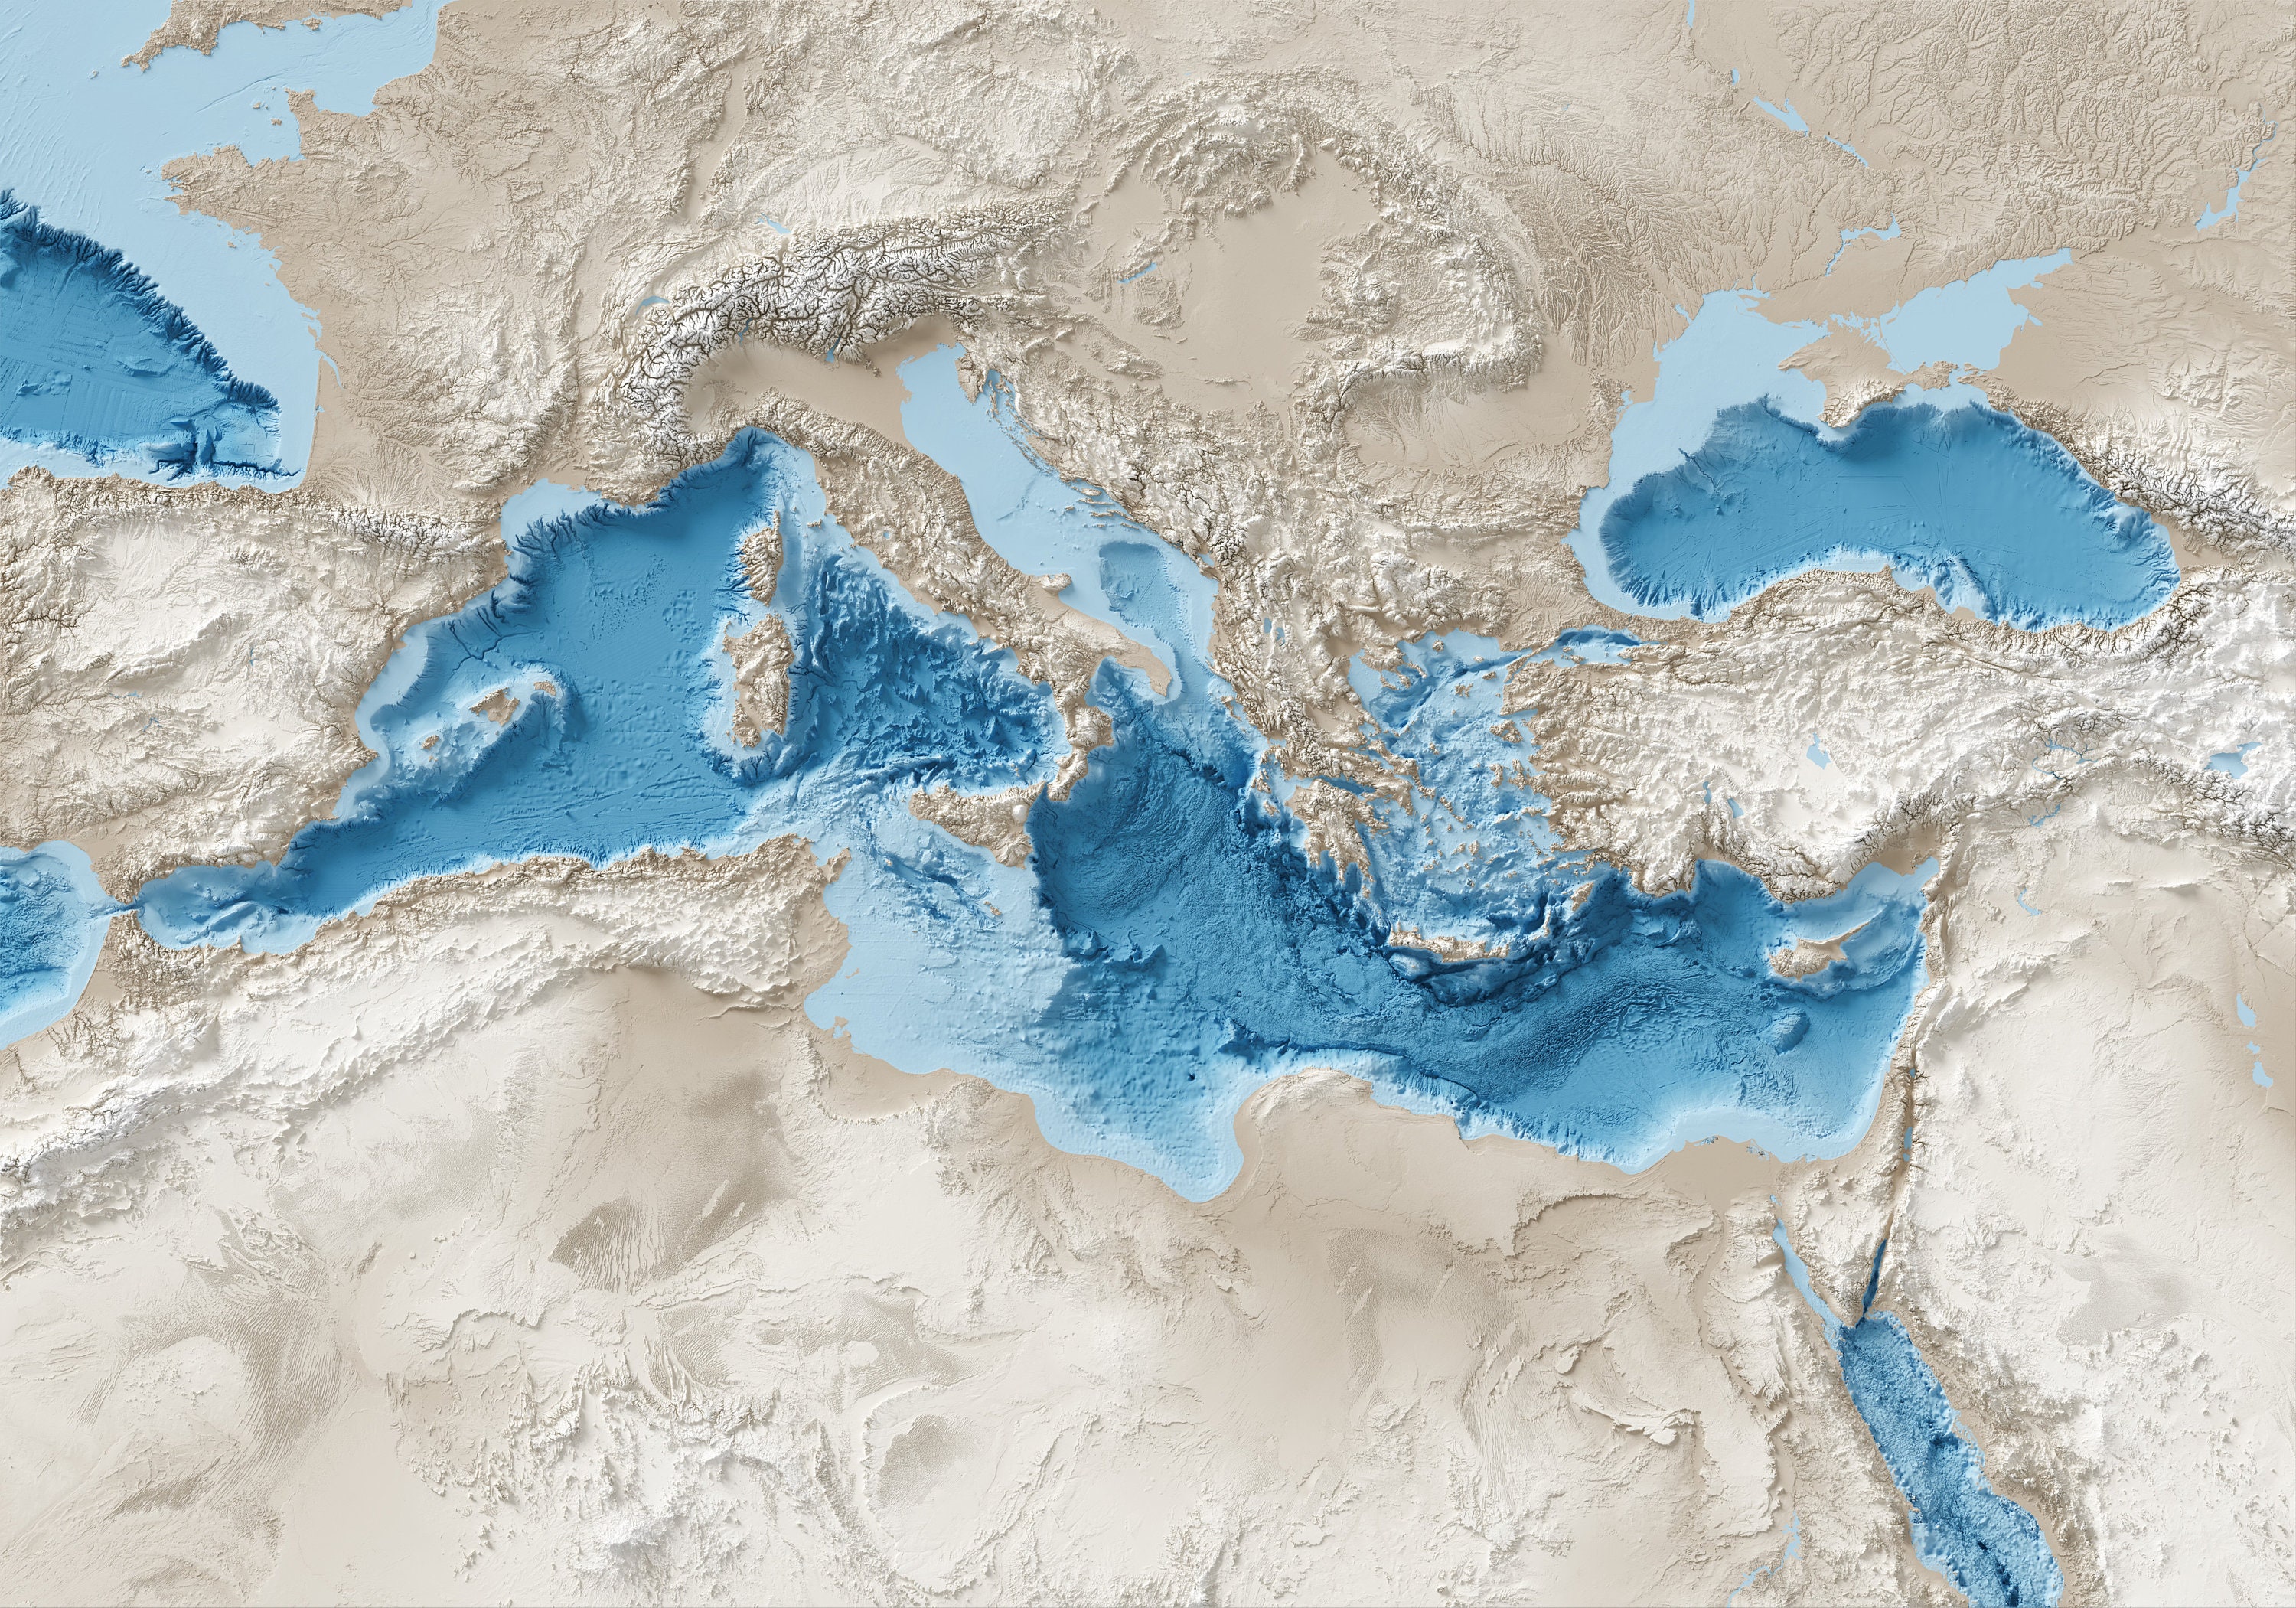 Illustrator EPS map Mediterranean Sea